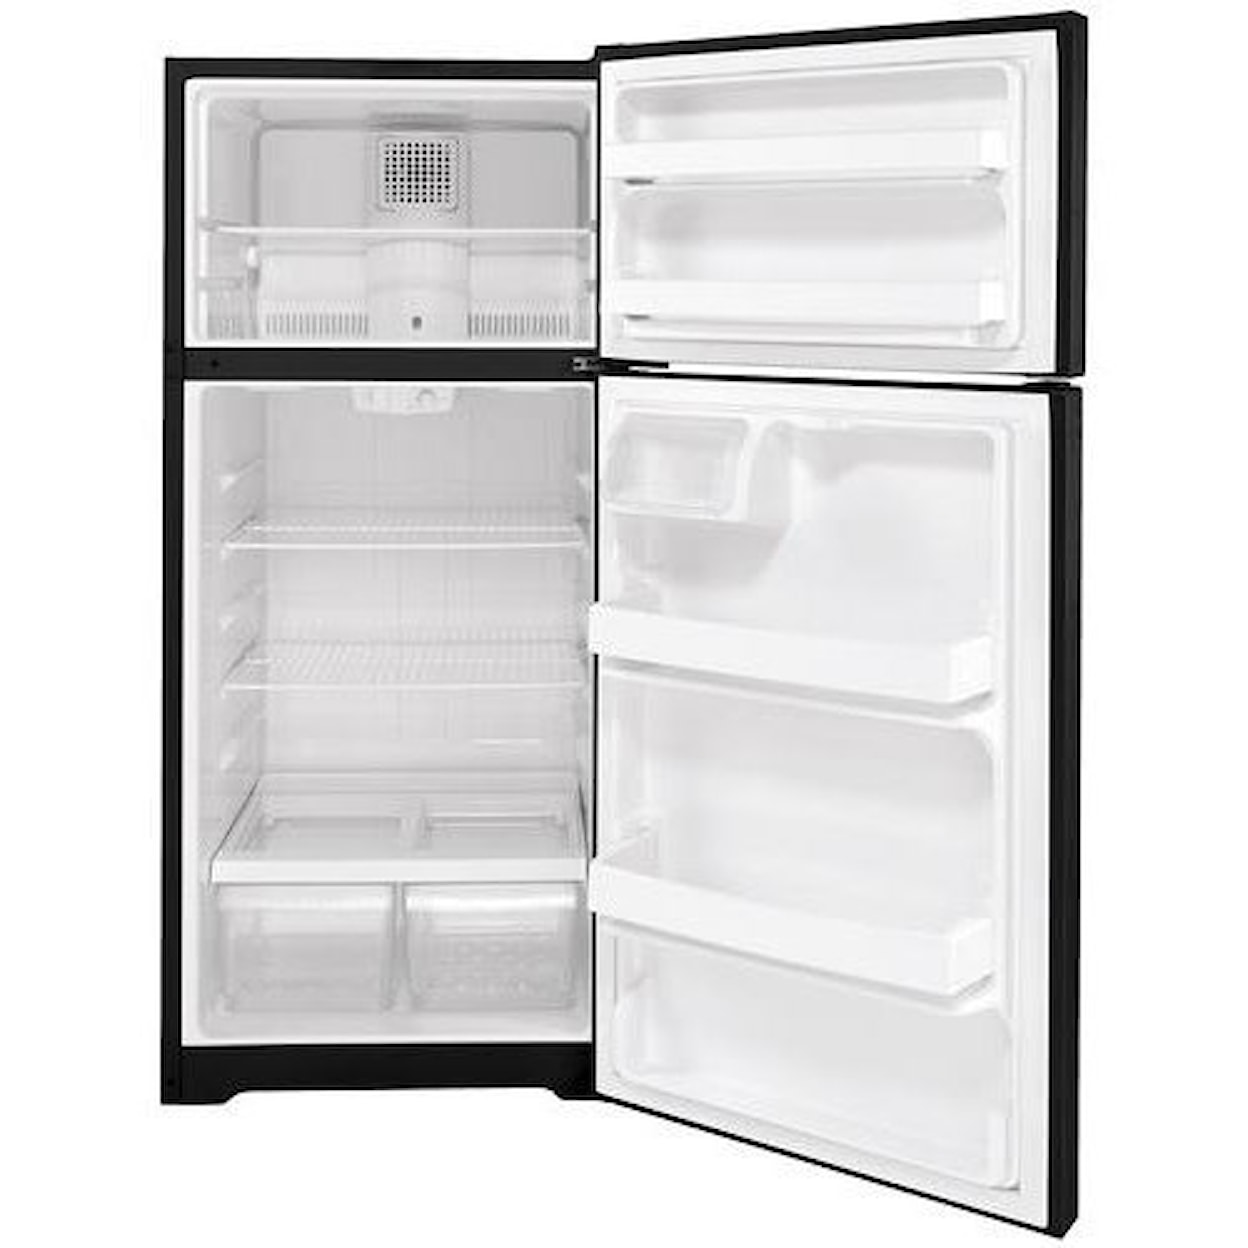 GE Appliances GE Top-Freezer Refrigerators 16.6 Cu. Ft. Black Top Freezer Refrigerator